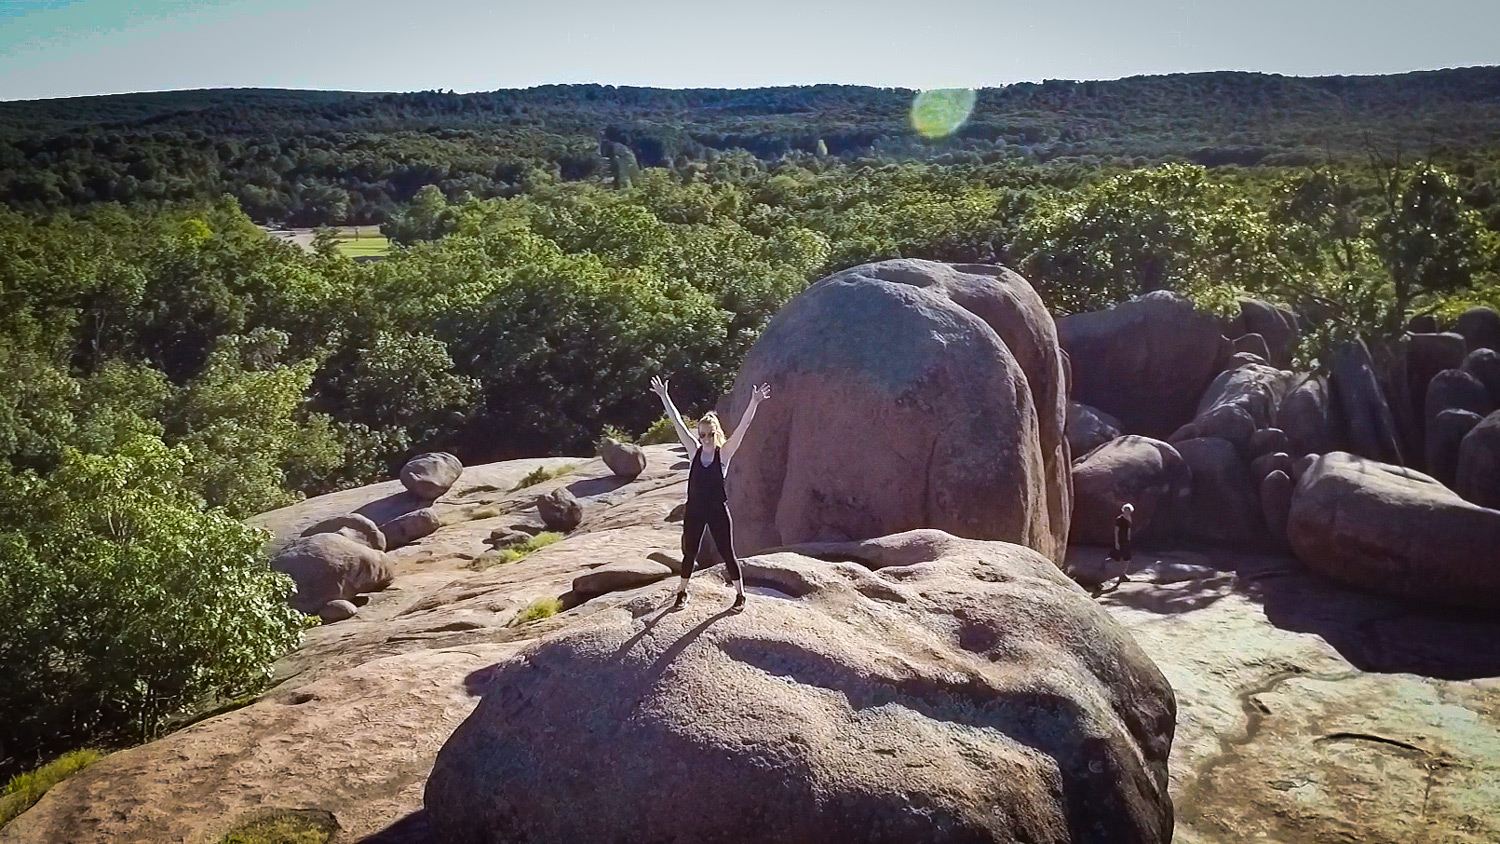 Travel vlog - Epic Drone Flight Over Giant Elephant Rocks!